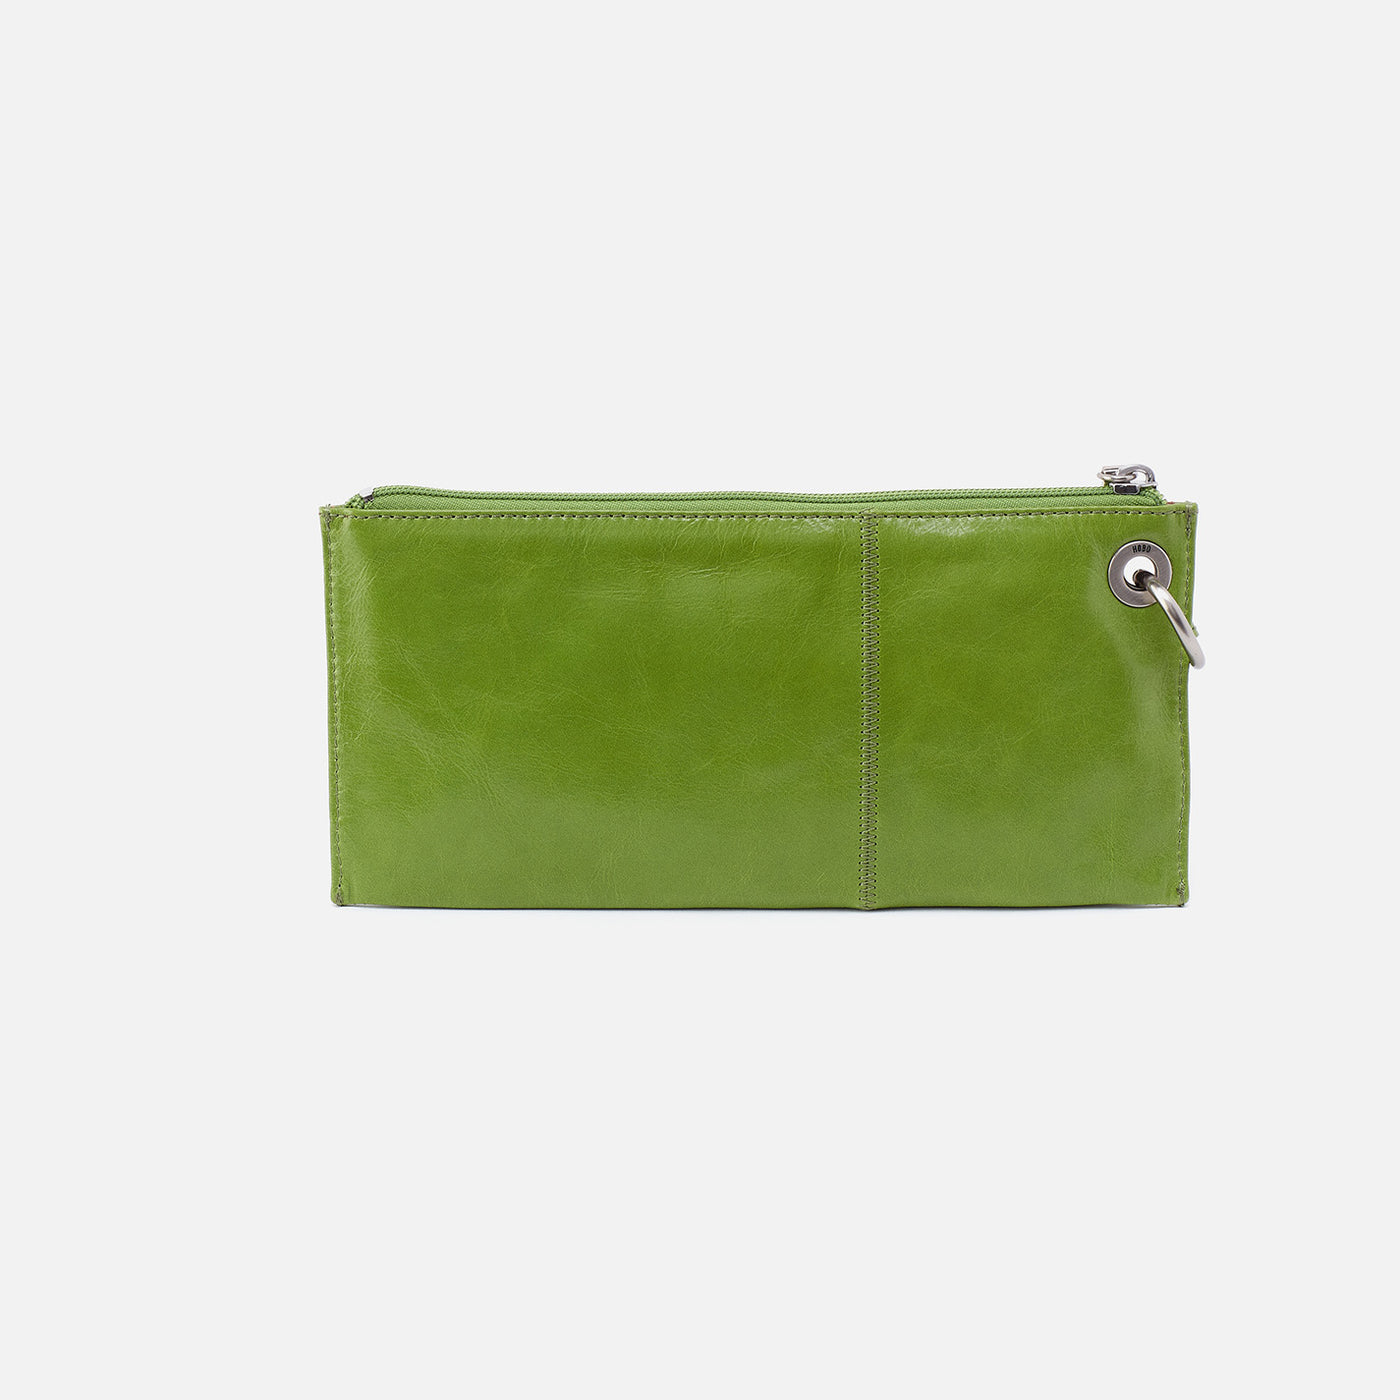 Vida Wristlet in Polished Leather - Garden Green